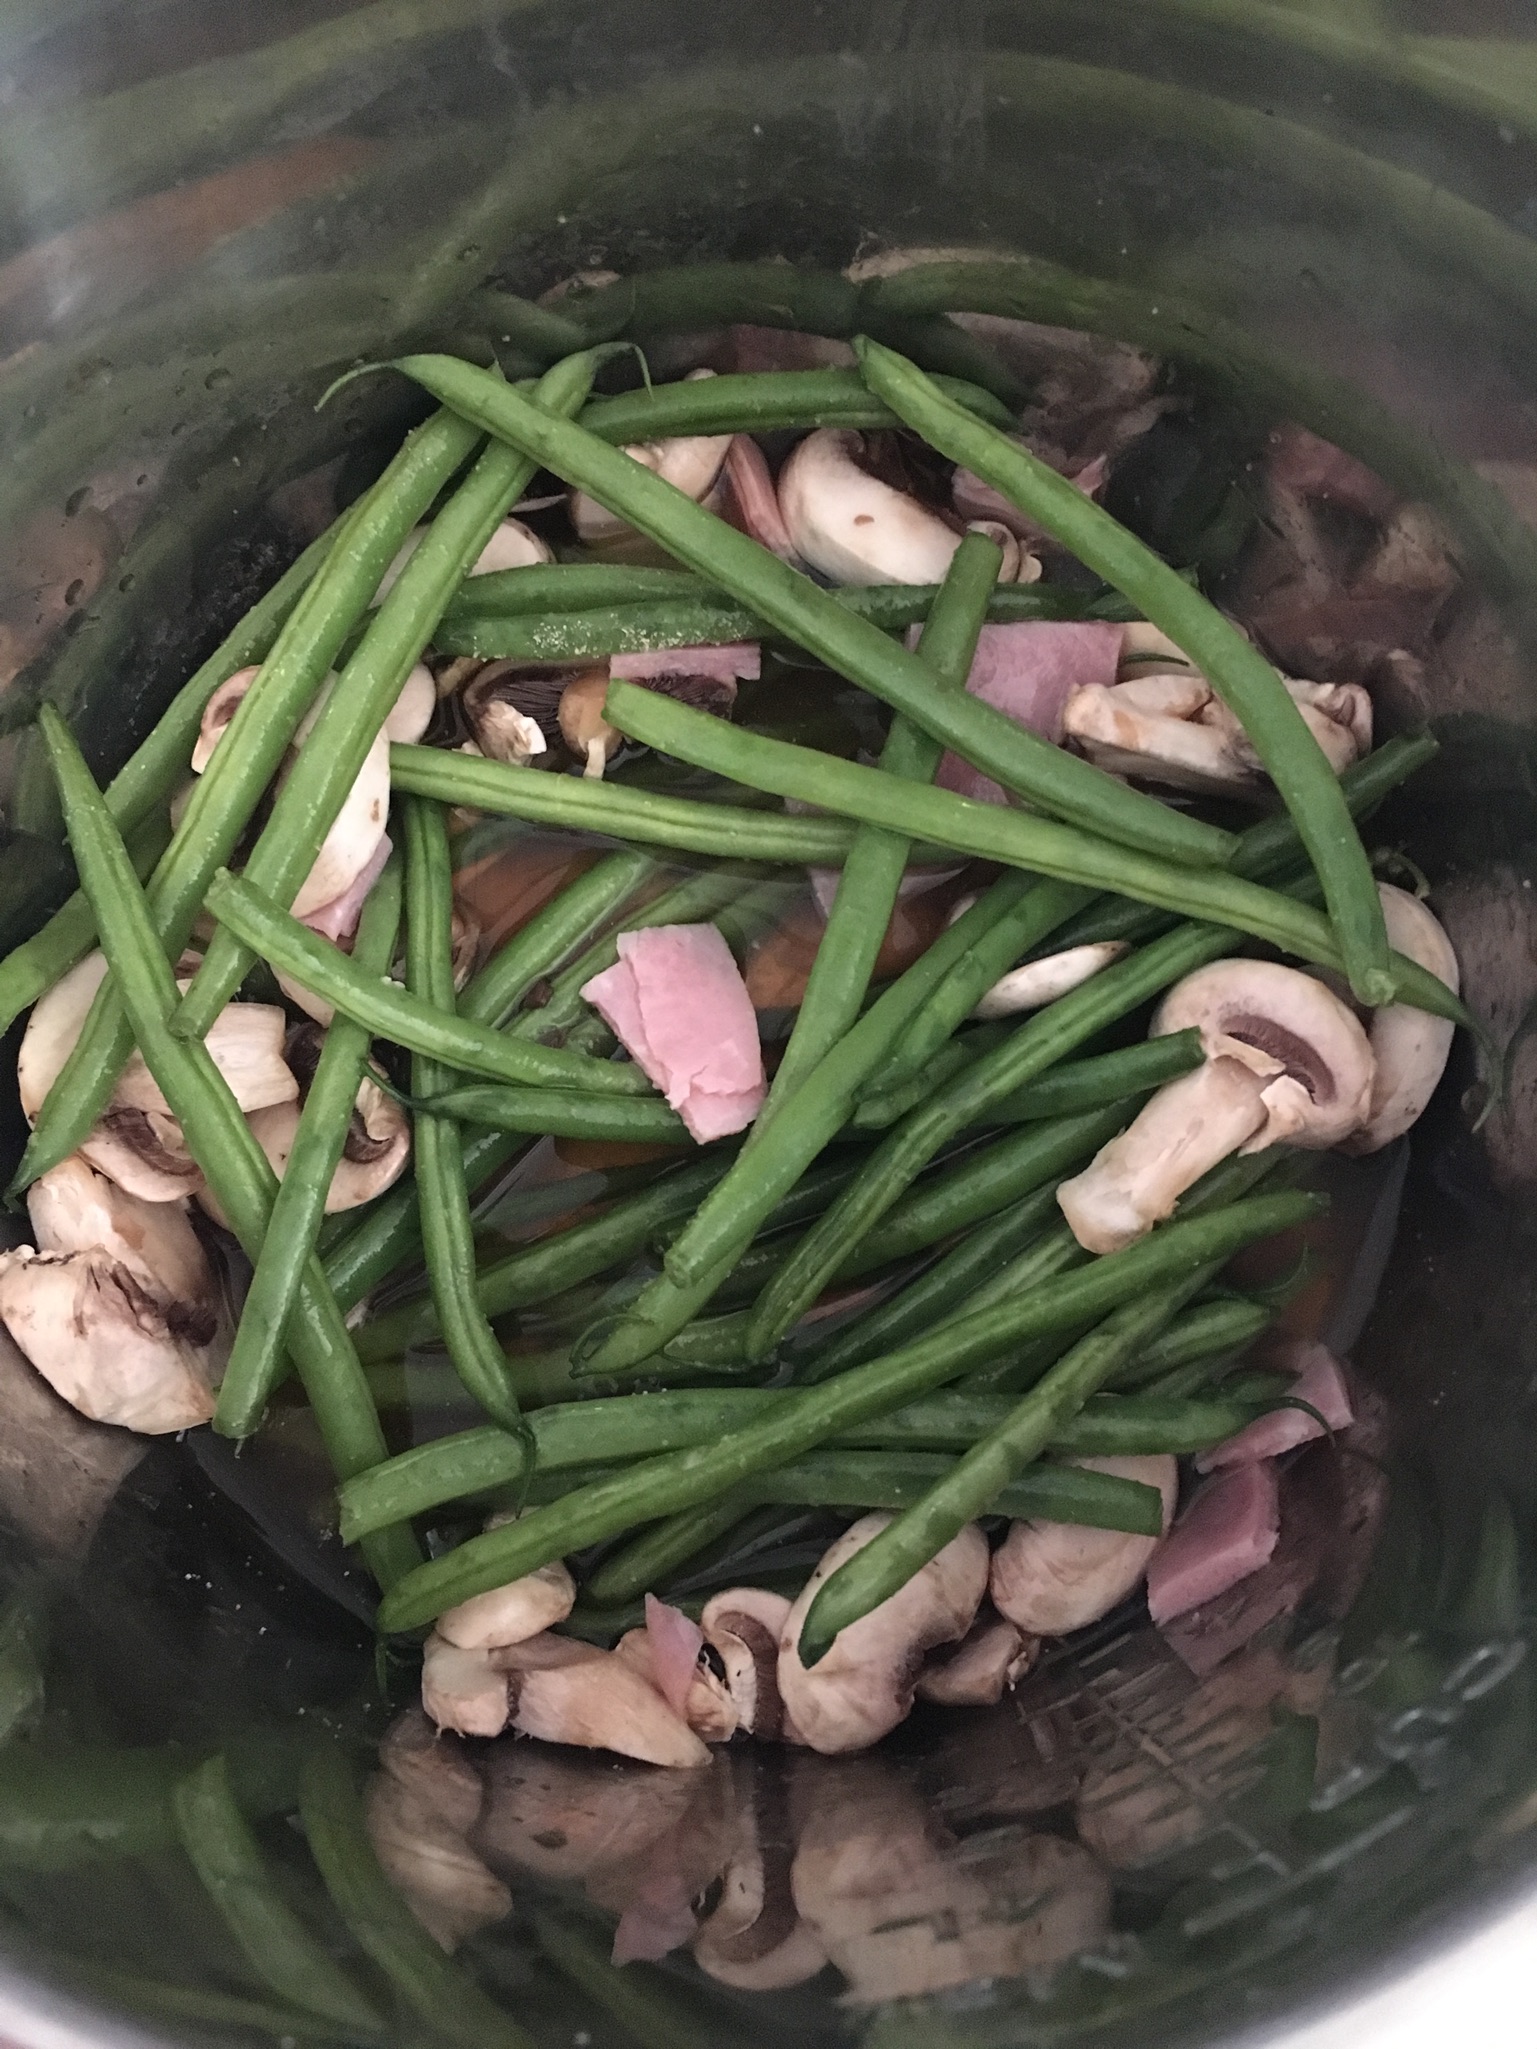 Instant pot green beans